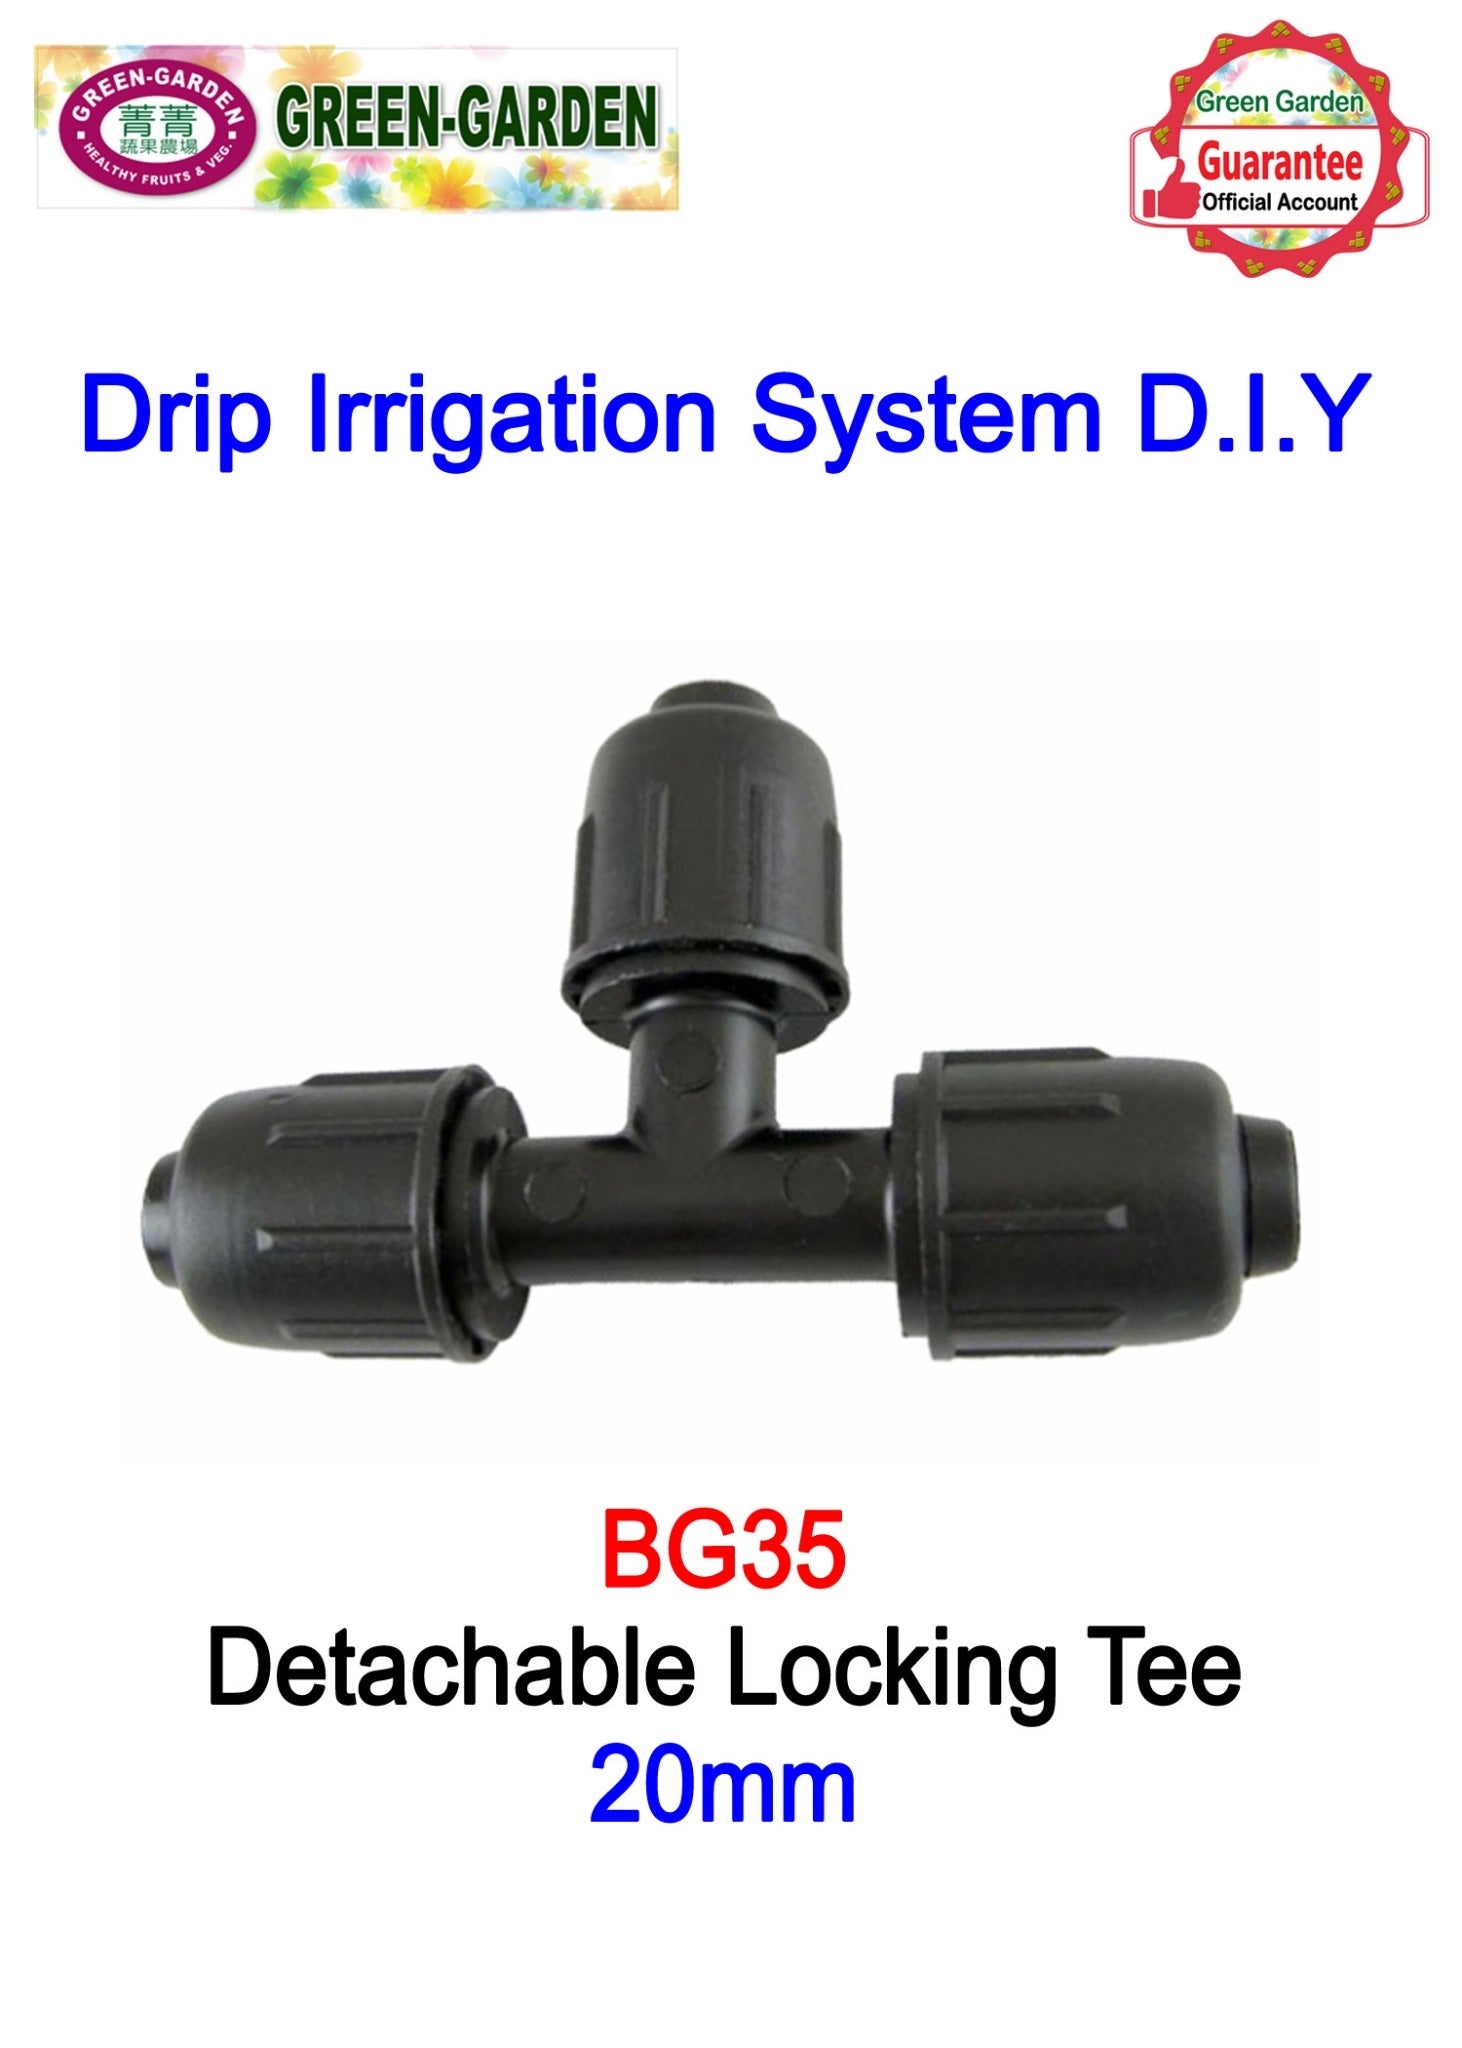 Drip Irrigation System - 20mm Detachable Locking Tee BG35